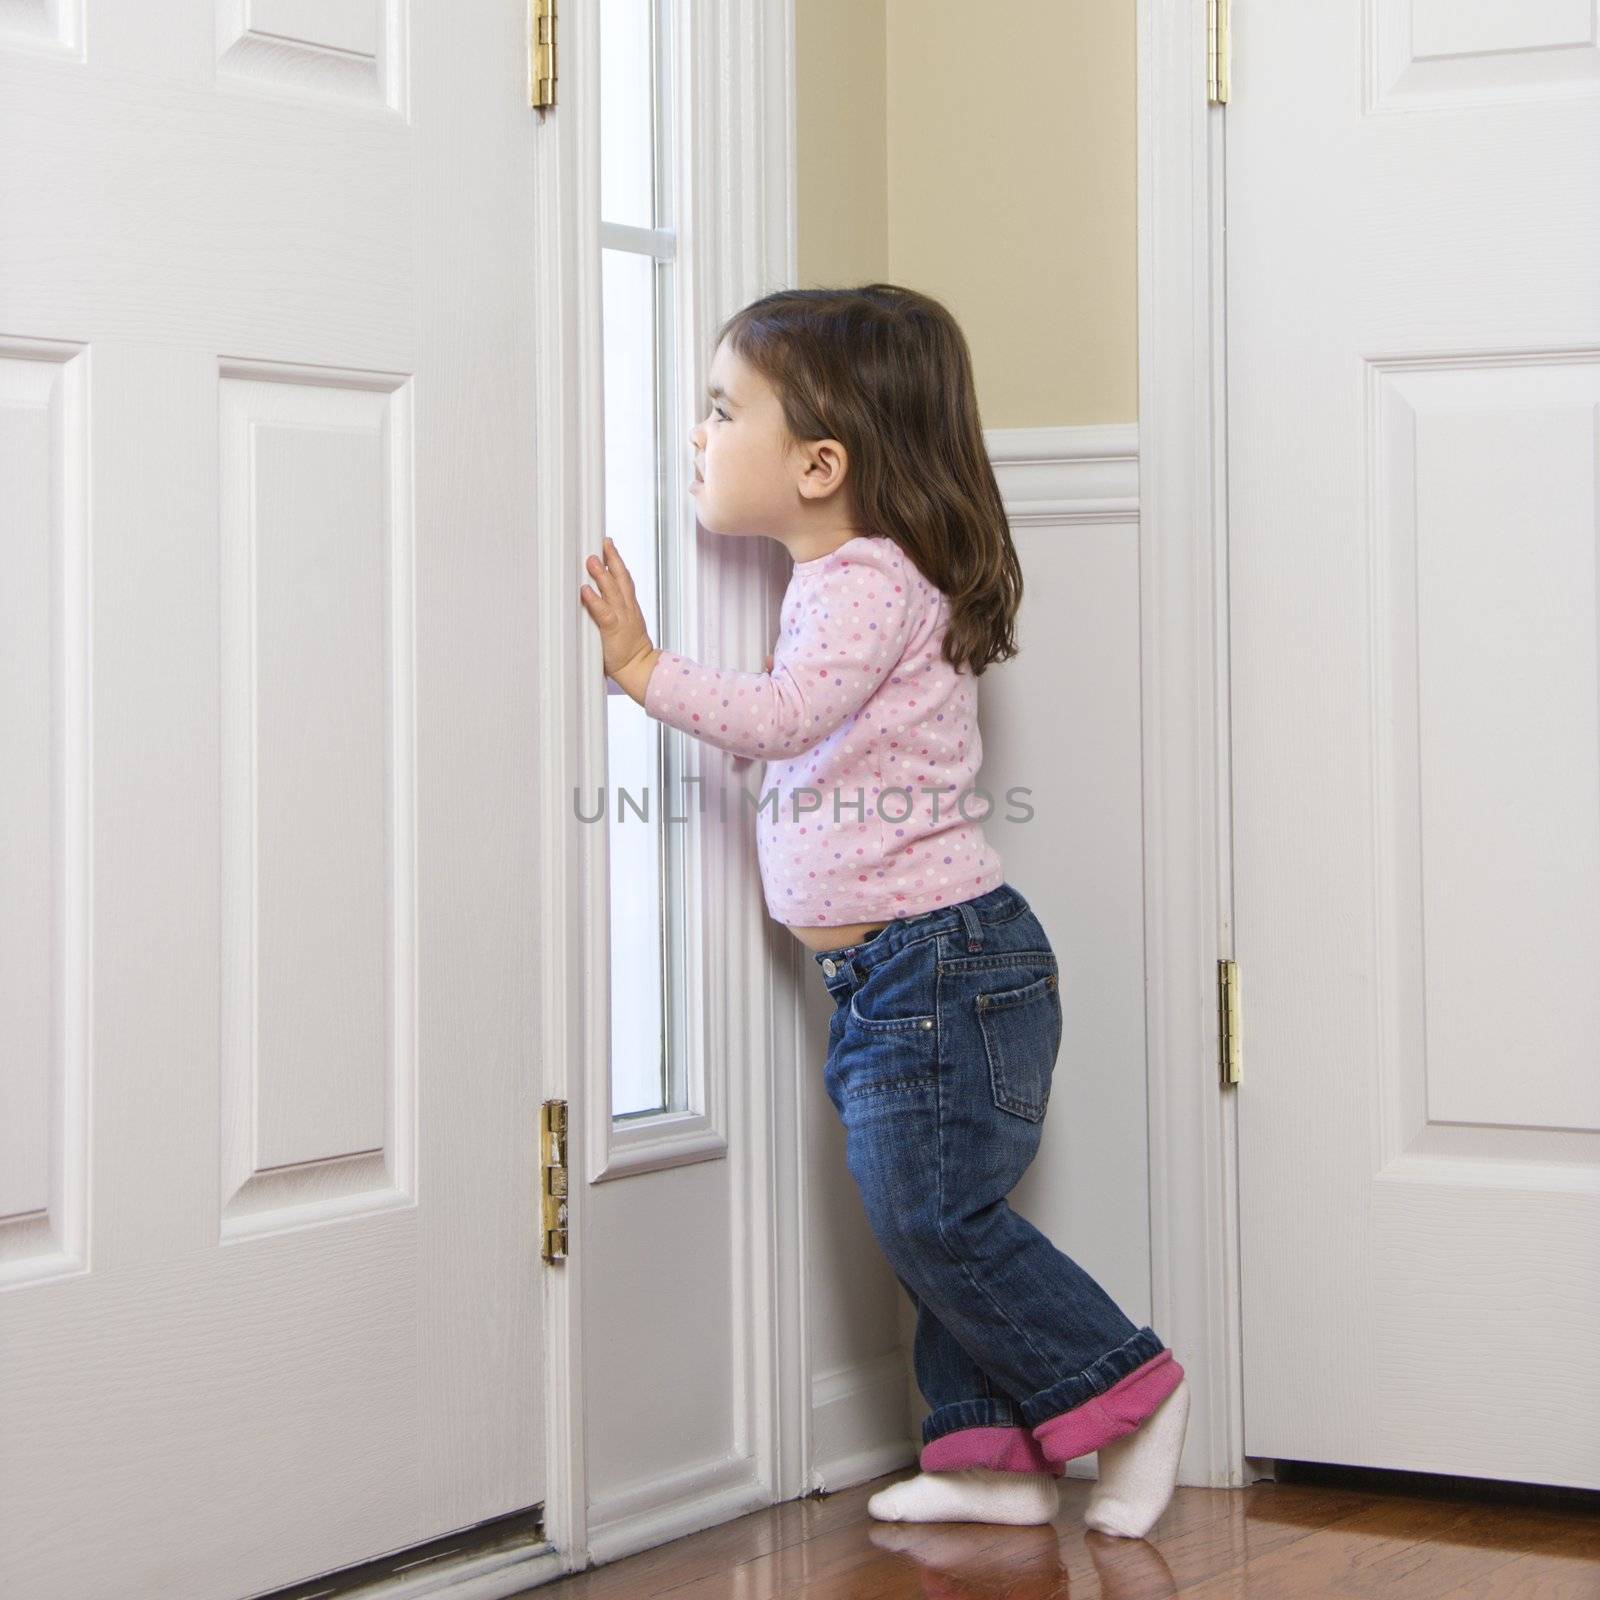 Caucasian girl toddler peeking out of window by door.